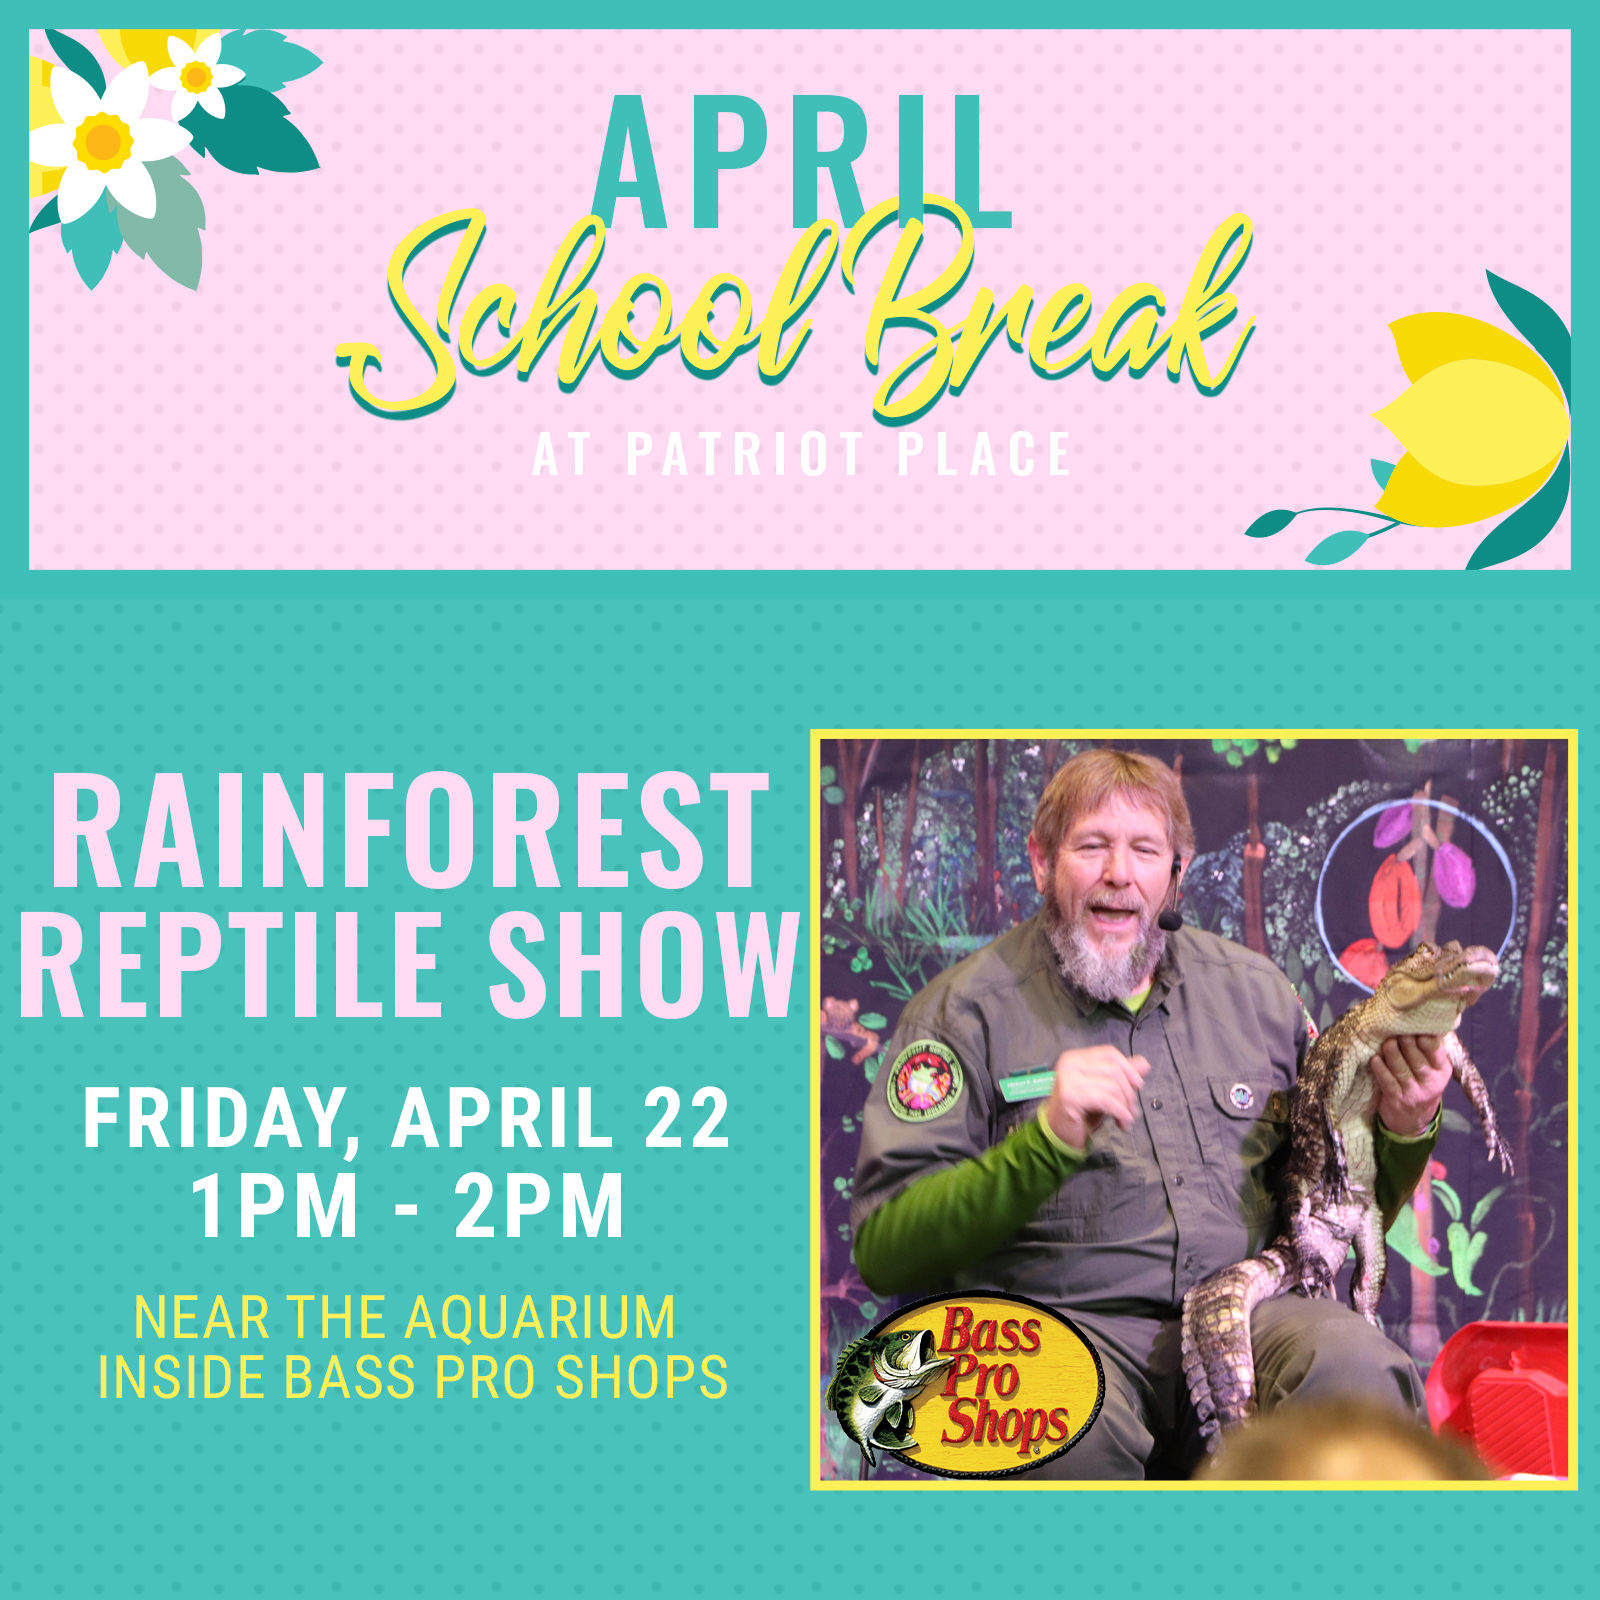 April School Break Reptile Show April 22